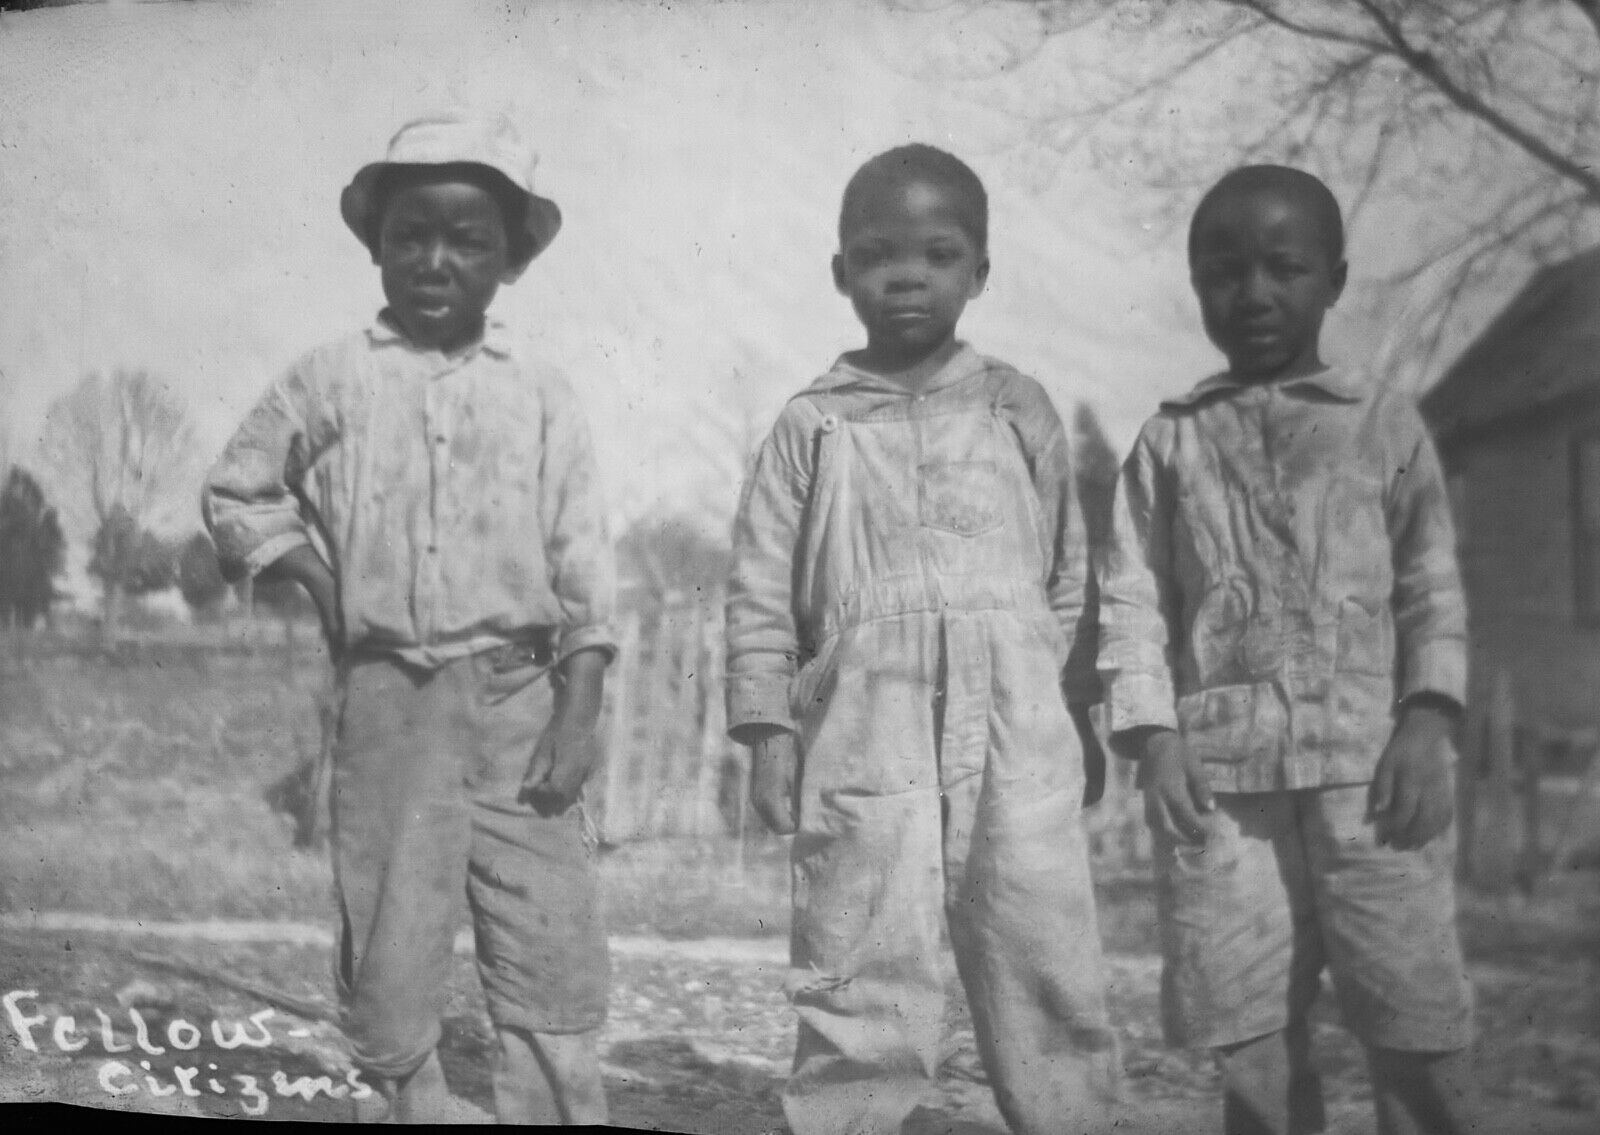 ANTIQUE MAGIC LANTERN SLIDE - PORTRAIT OF THREE YOUNG BLACK BOYS